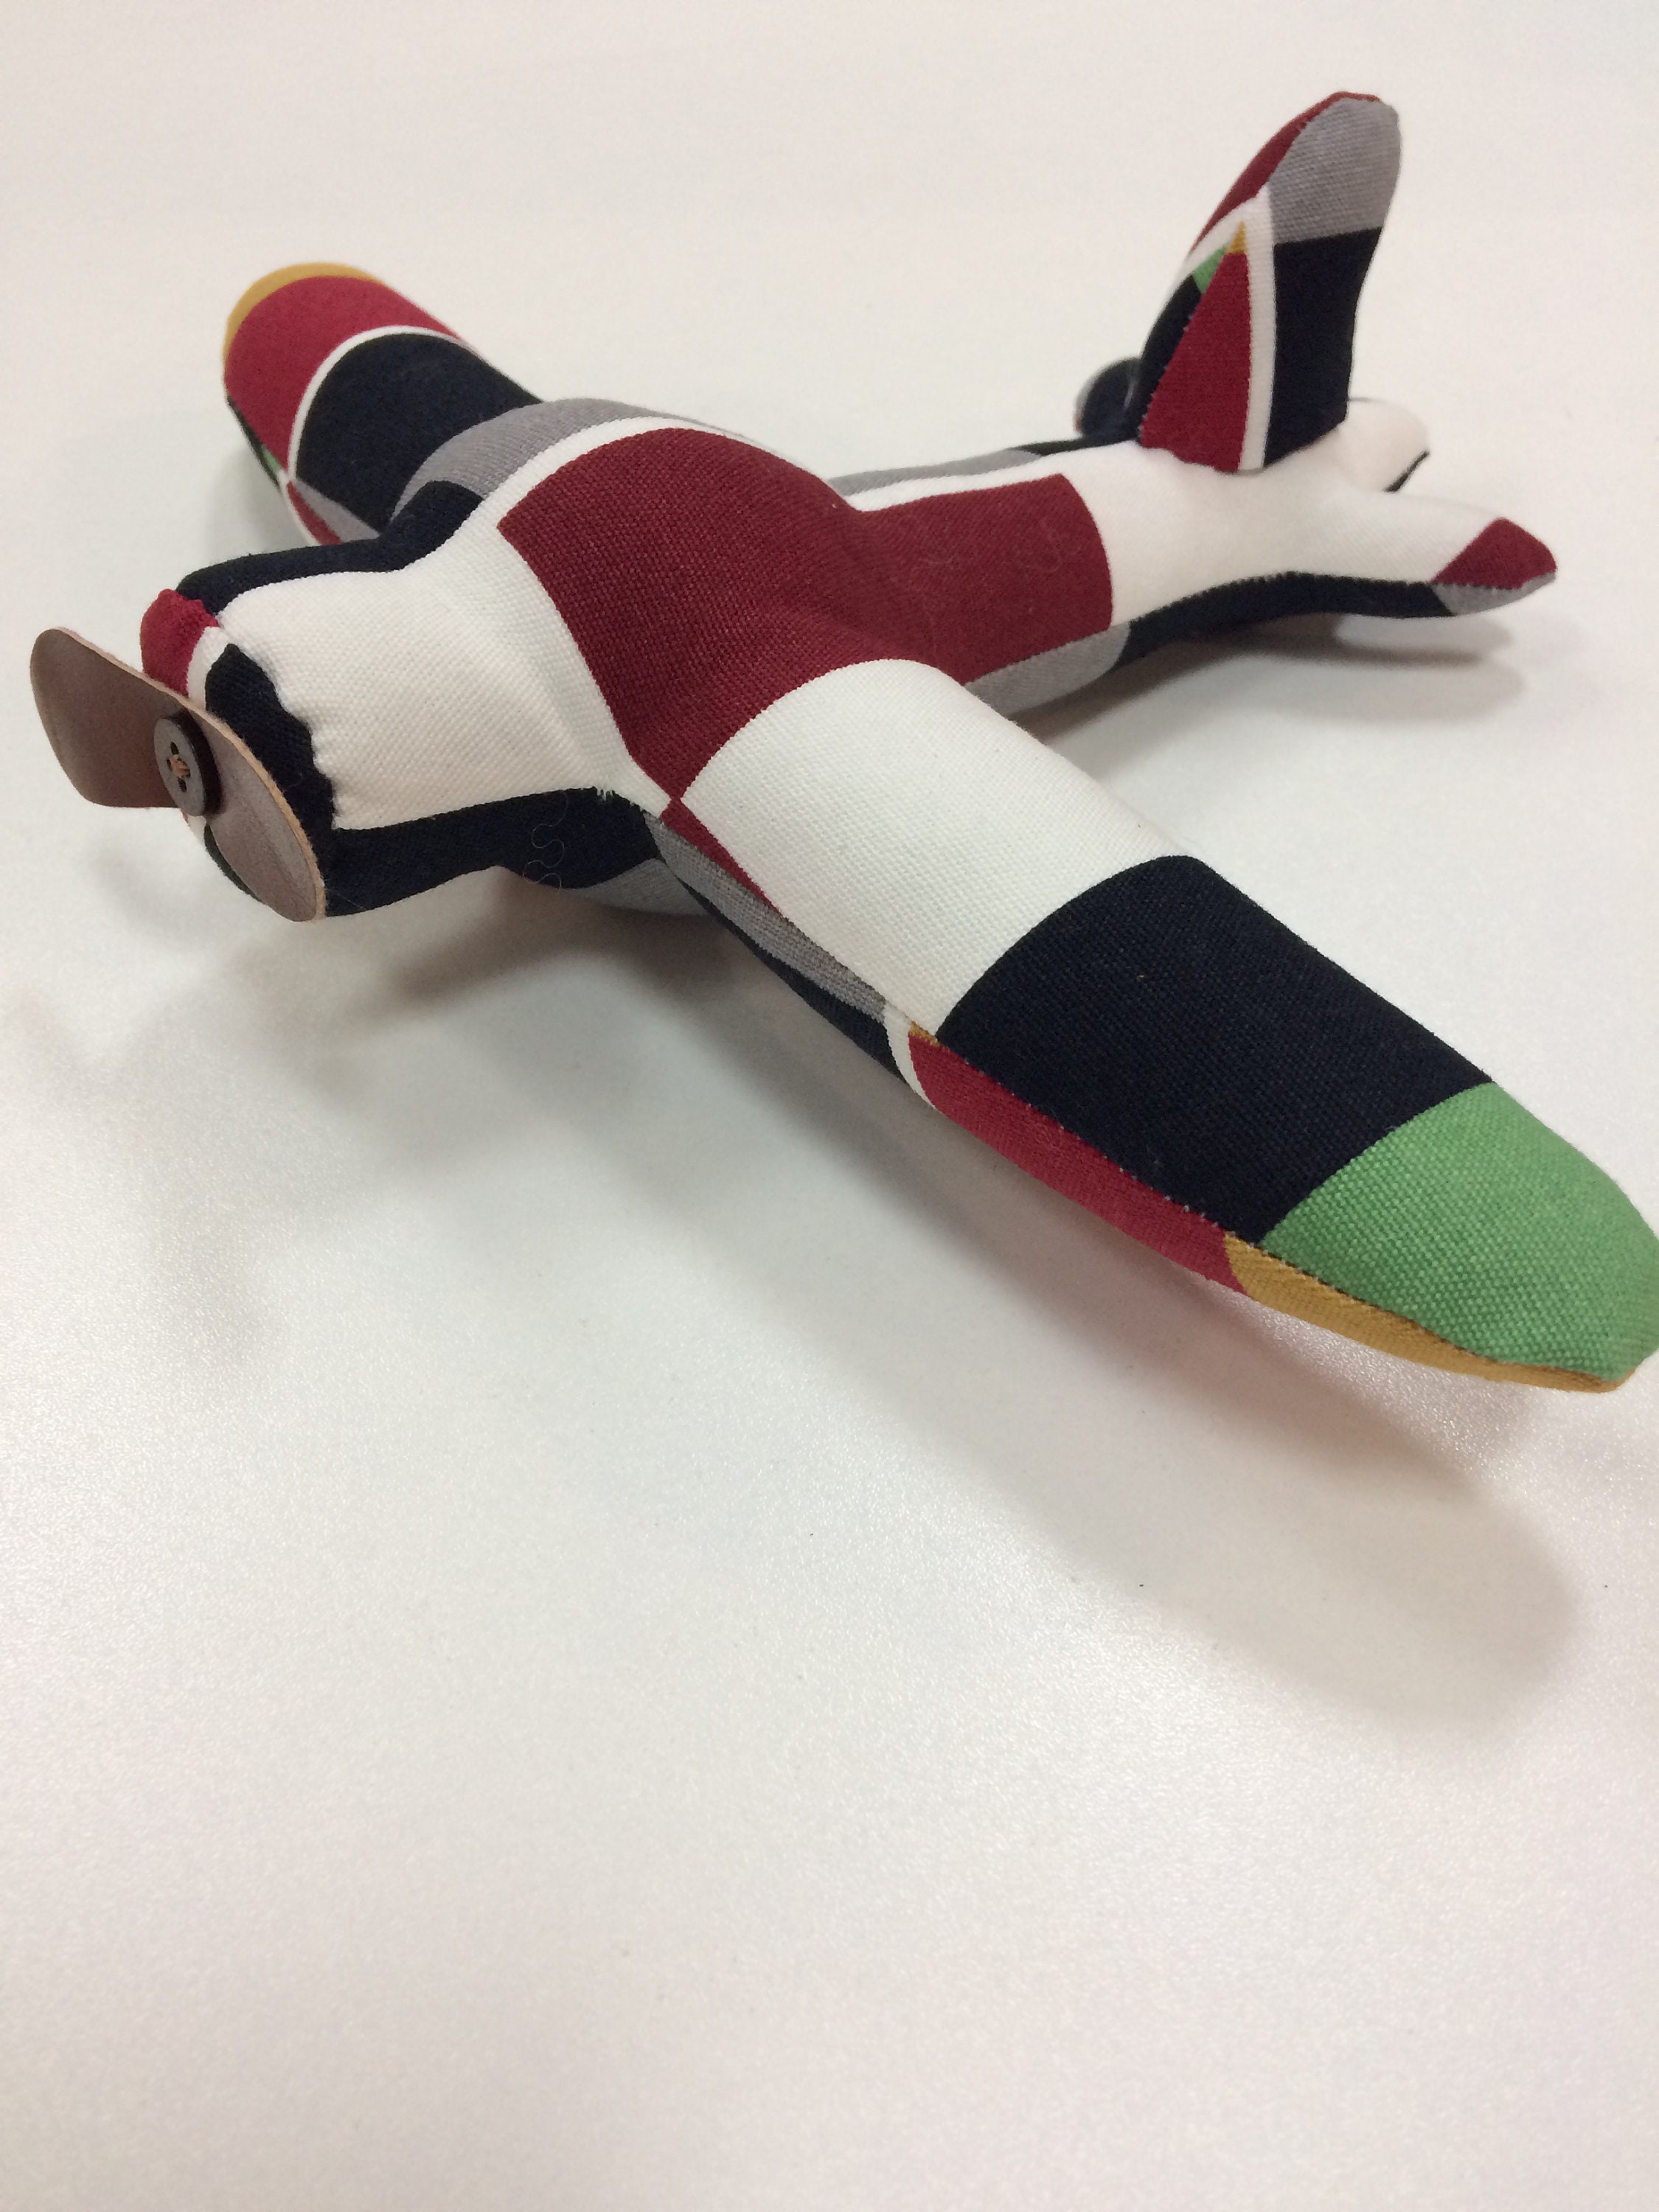 Stuffed Airplane plane toy stuffed plane Etsy